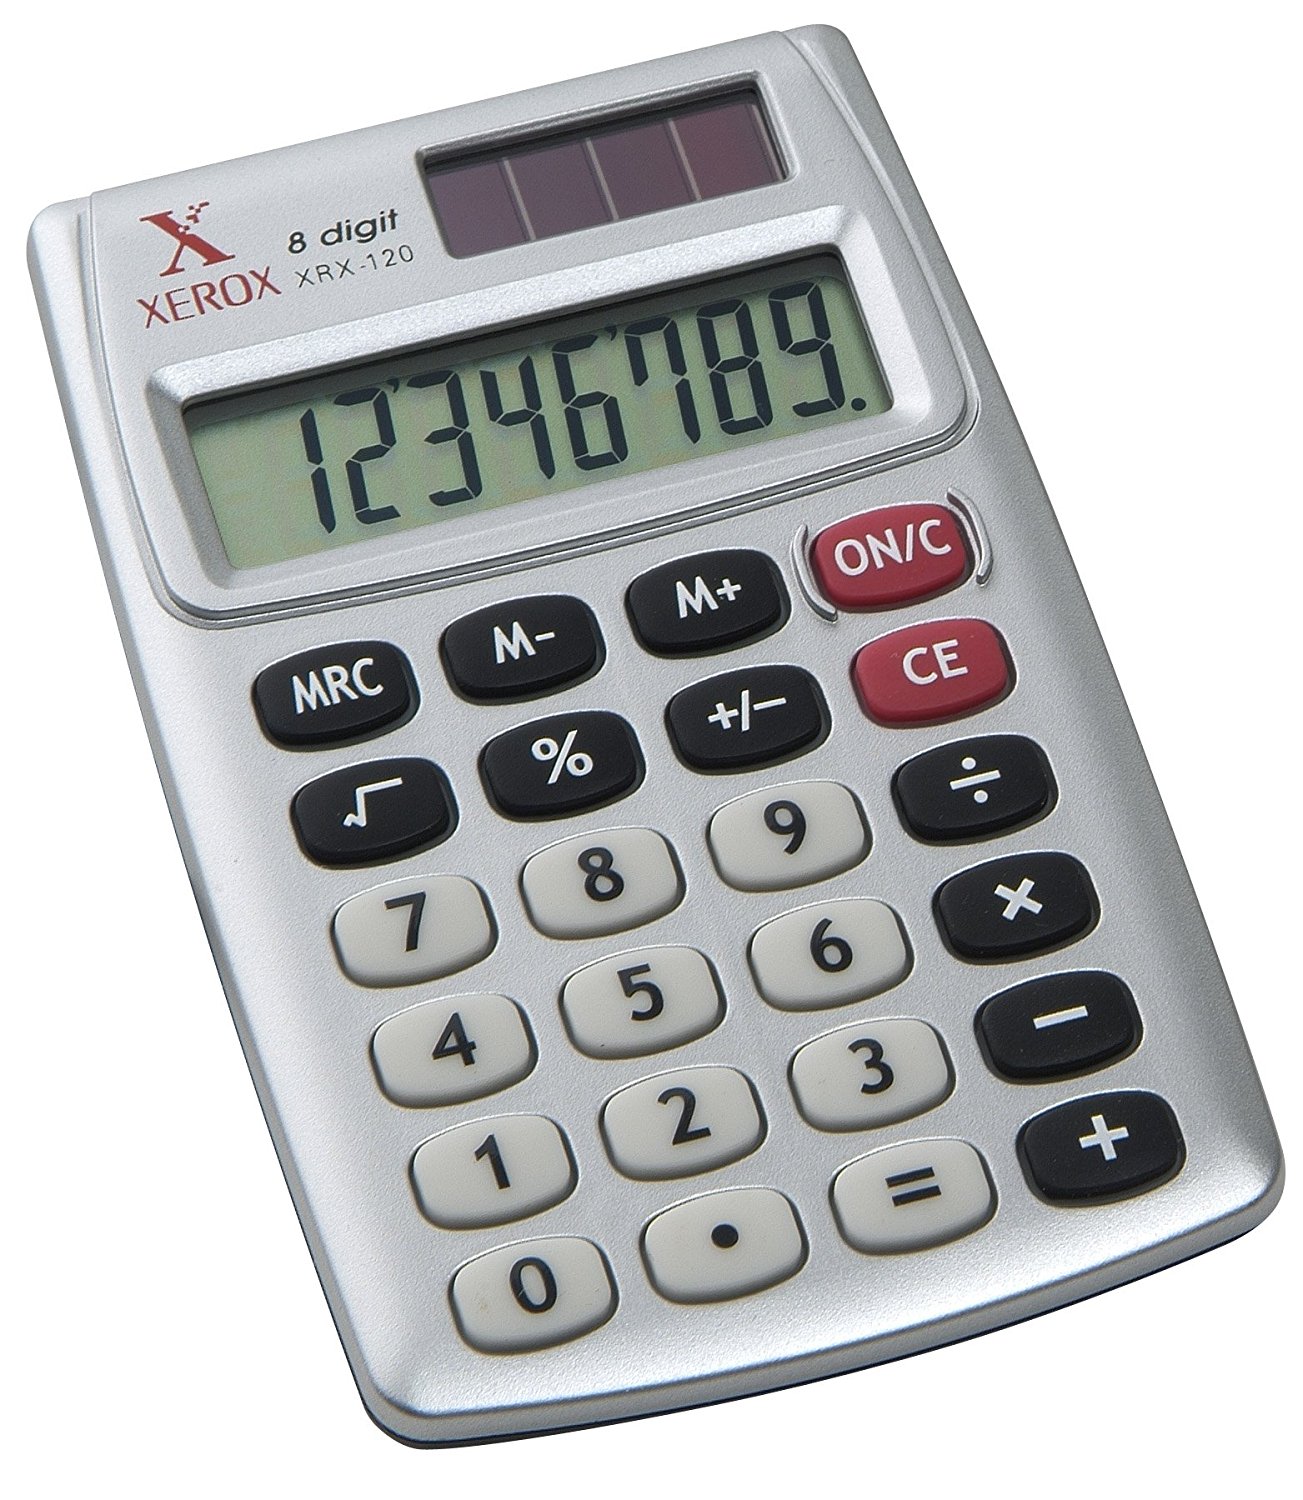 Amazon.com: Staples Spl-120 8-digit Display Calculator: Office Products